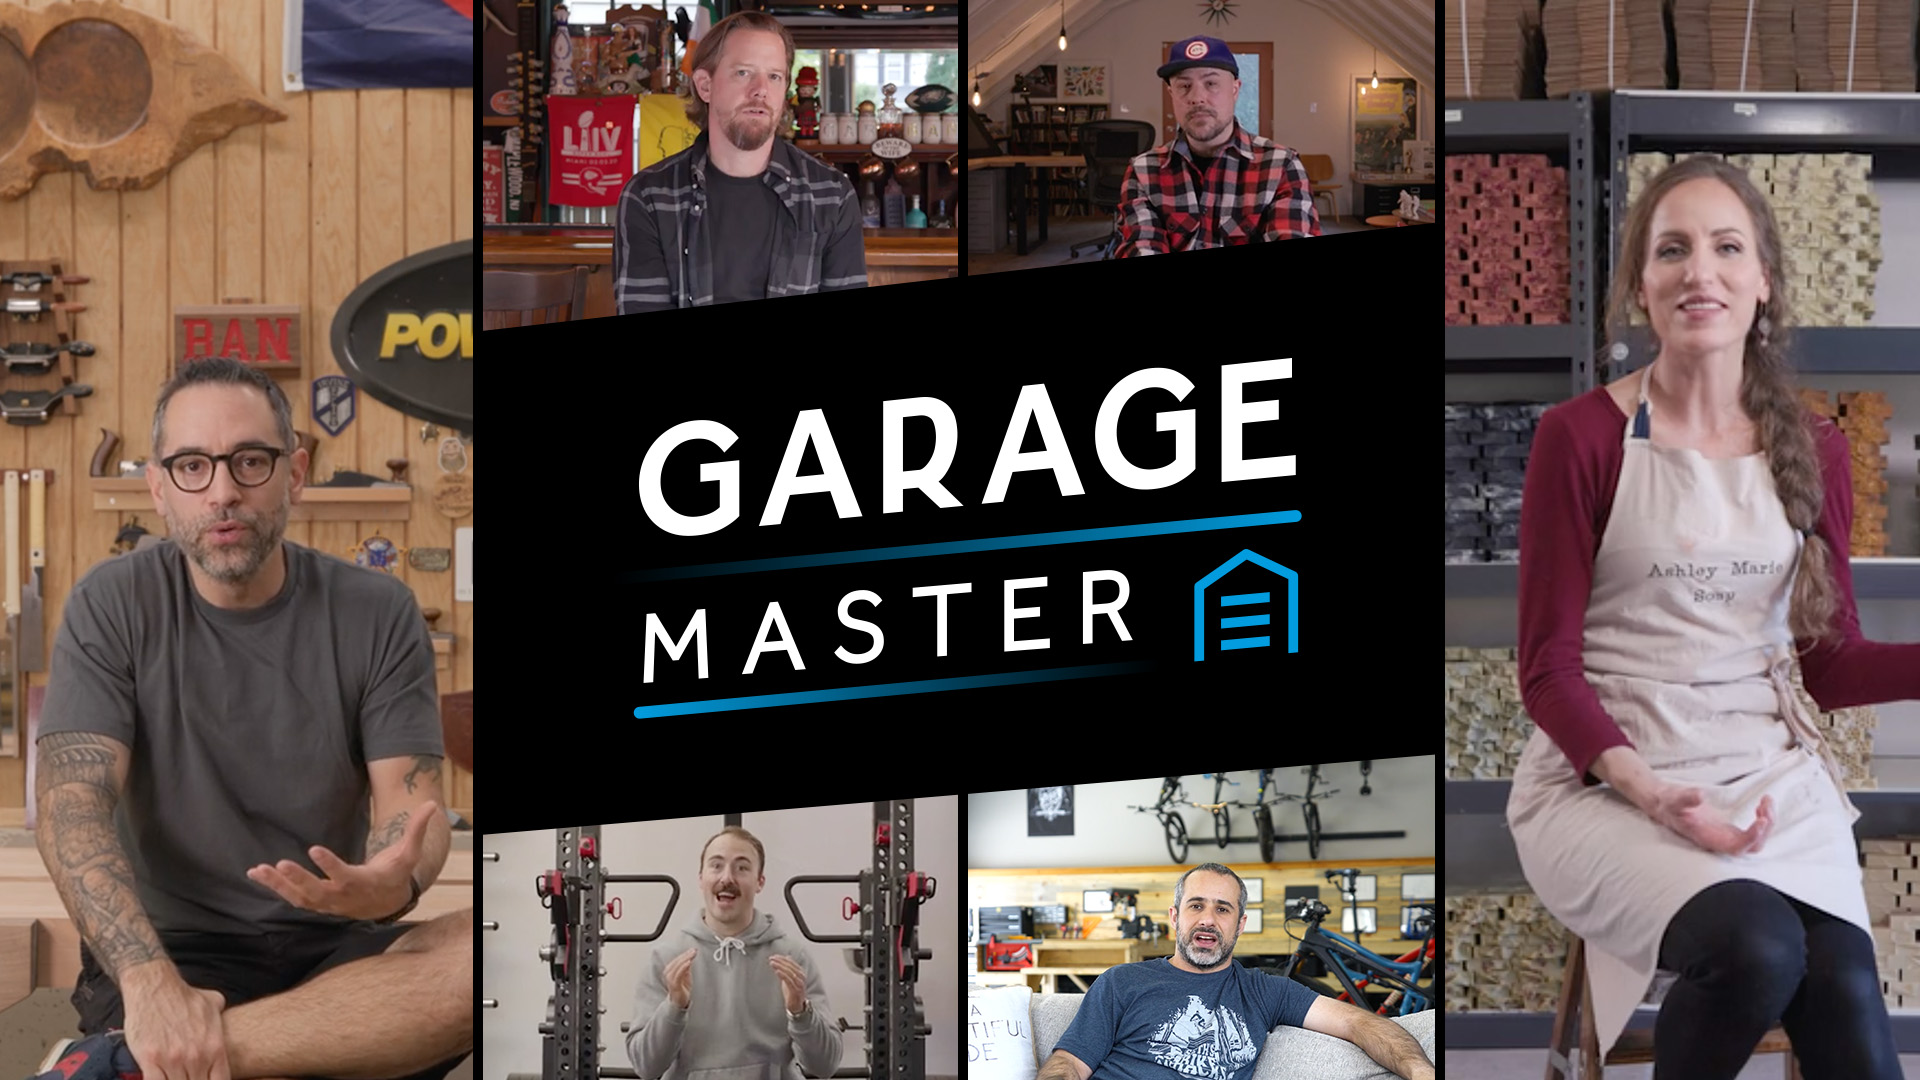 The myQ Garage Master docuseries will change the way you see the garage. Watch full videos at myq.com/garagemaster.